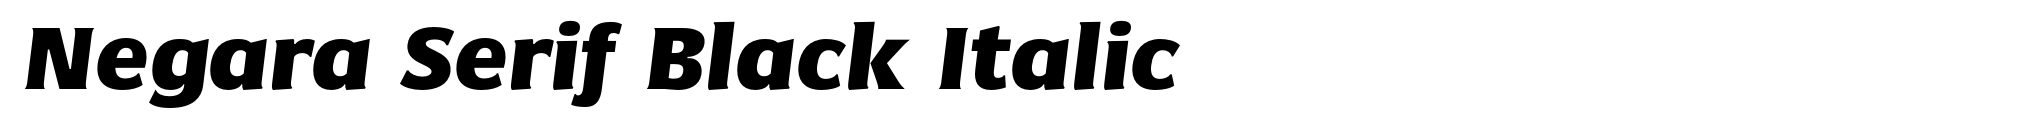 Negara Serif Black Italic image